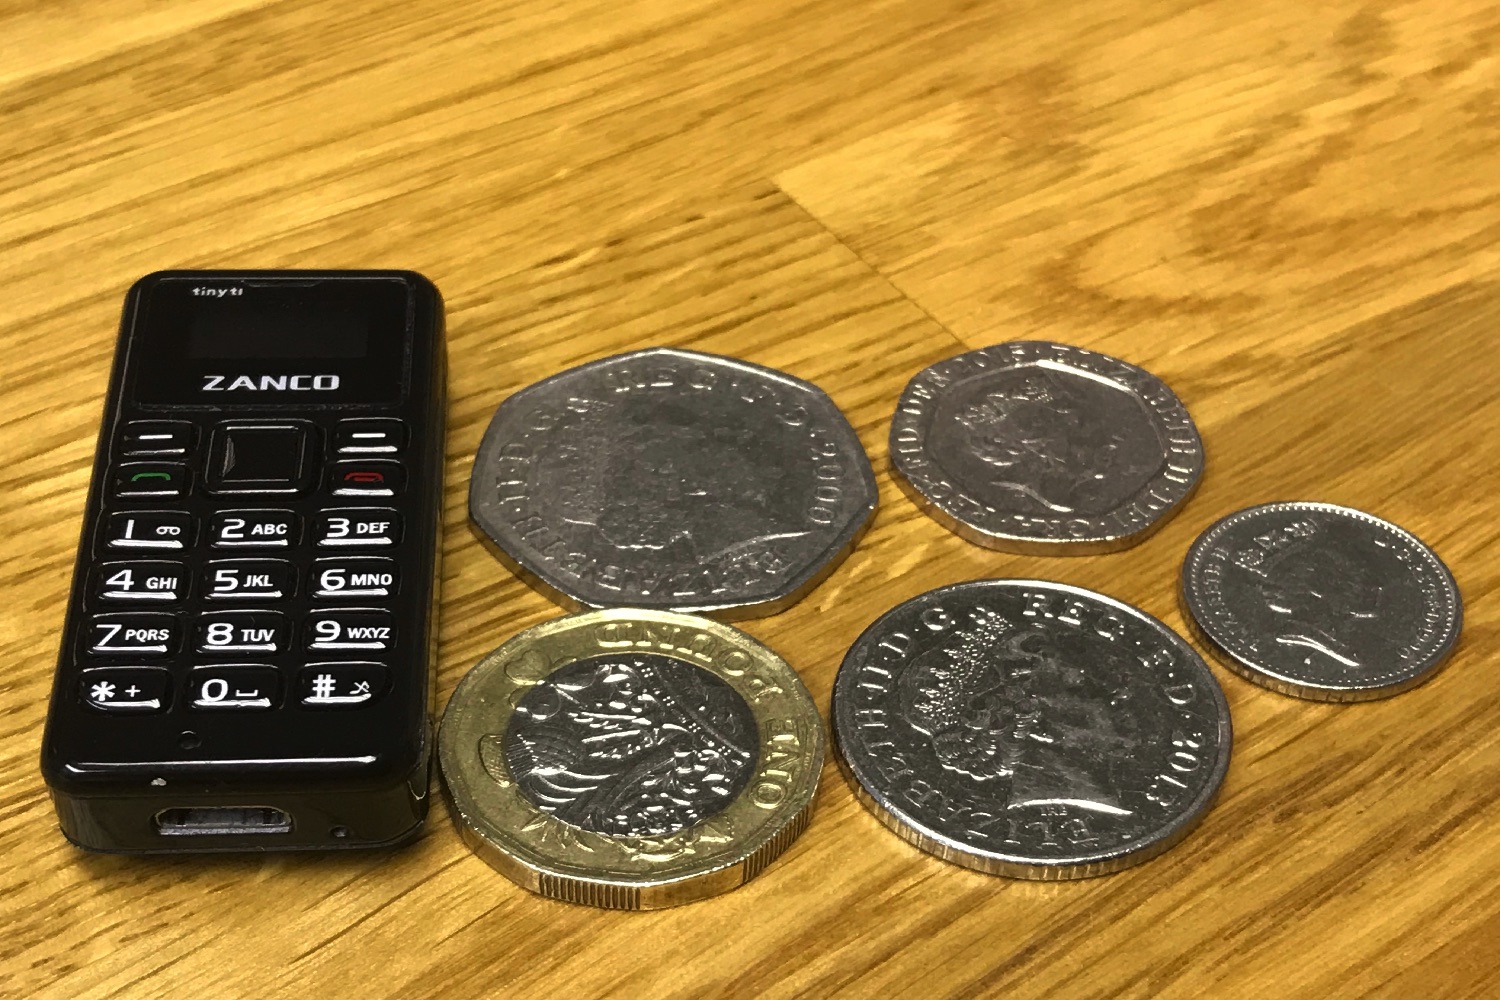 worlds tiniest cellphone kickstarter zanco tiny t1 with coins